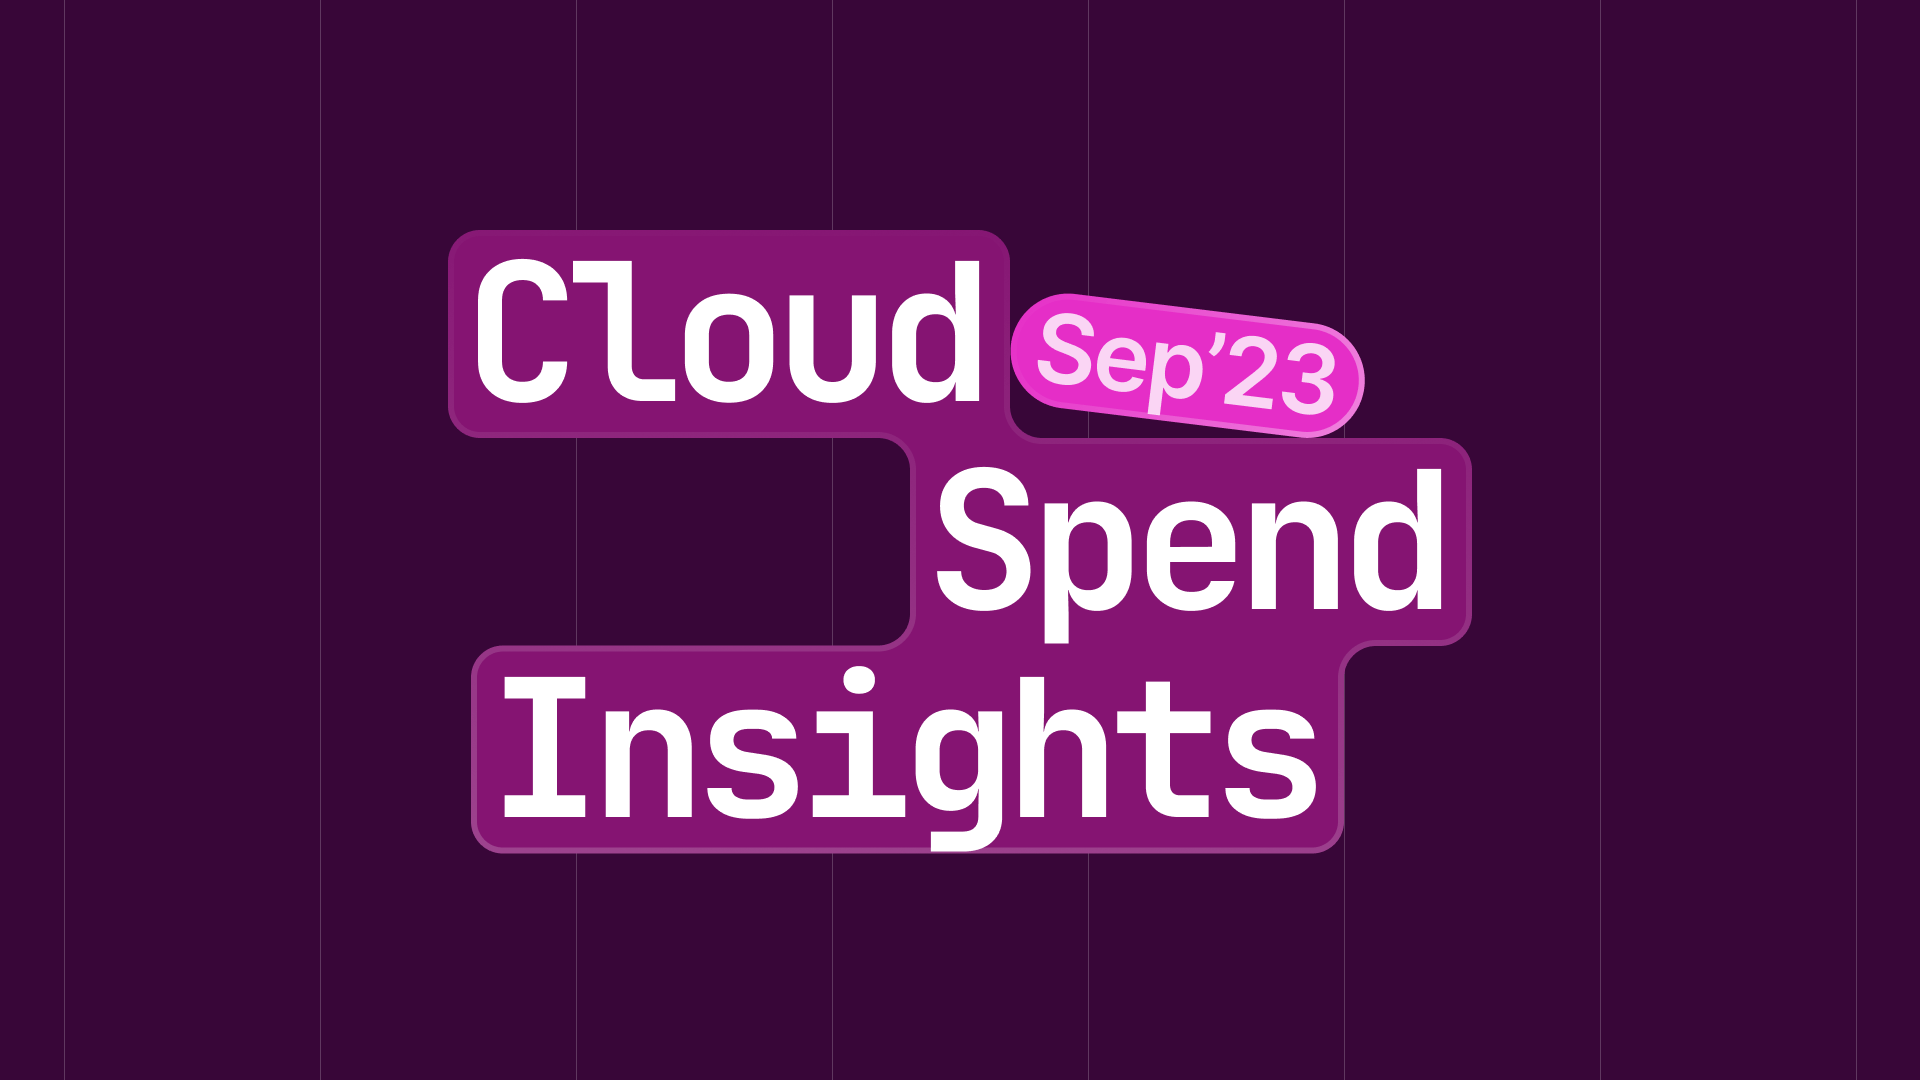 Cloud spend insights